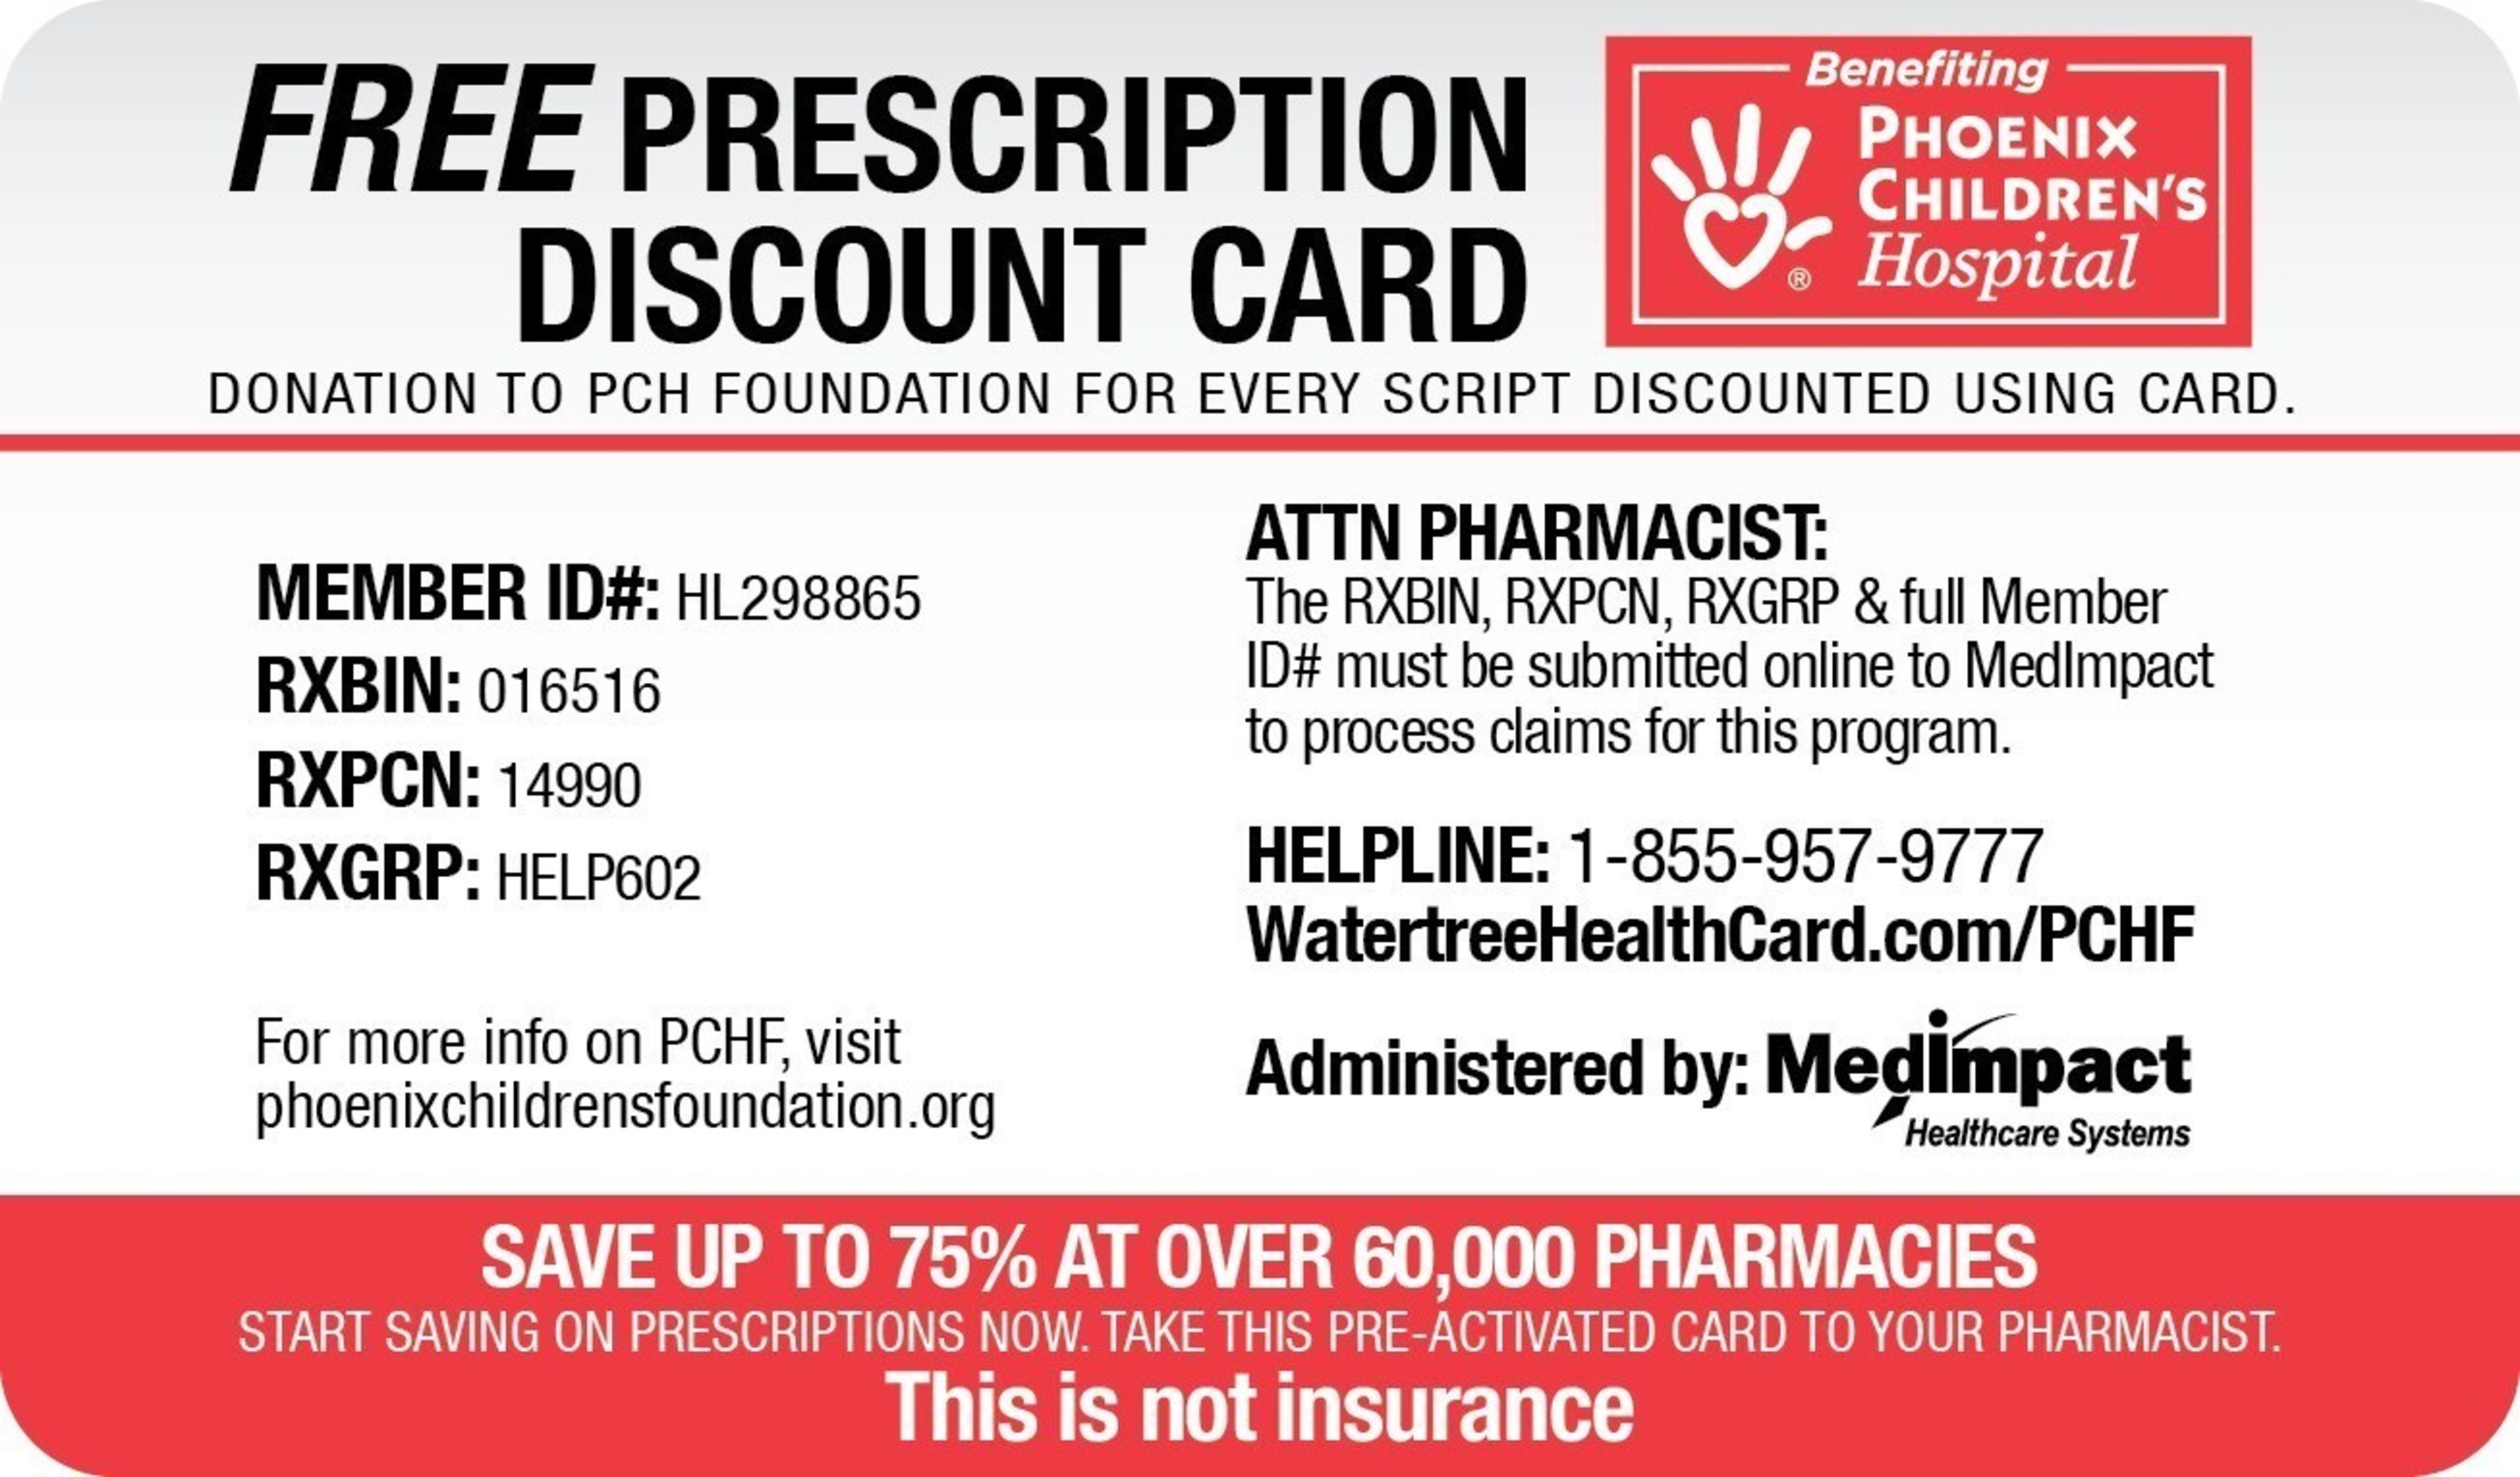 Prescription Discount Card benefiting Phoenix Children's Hospital